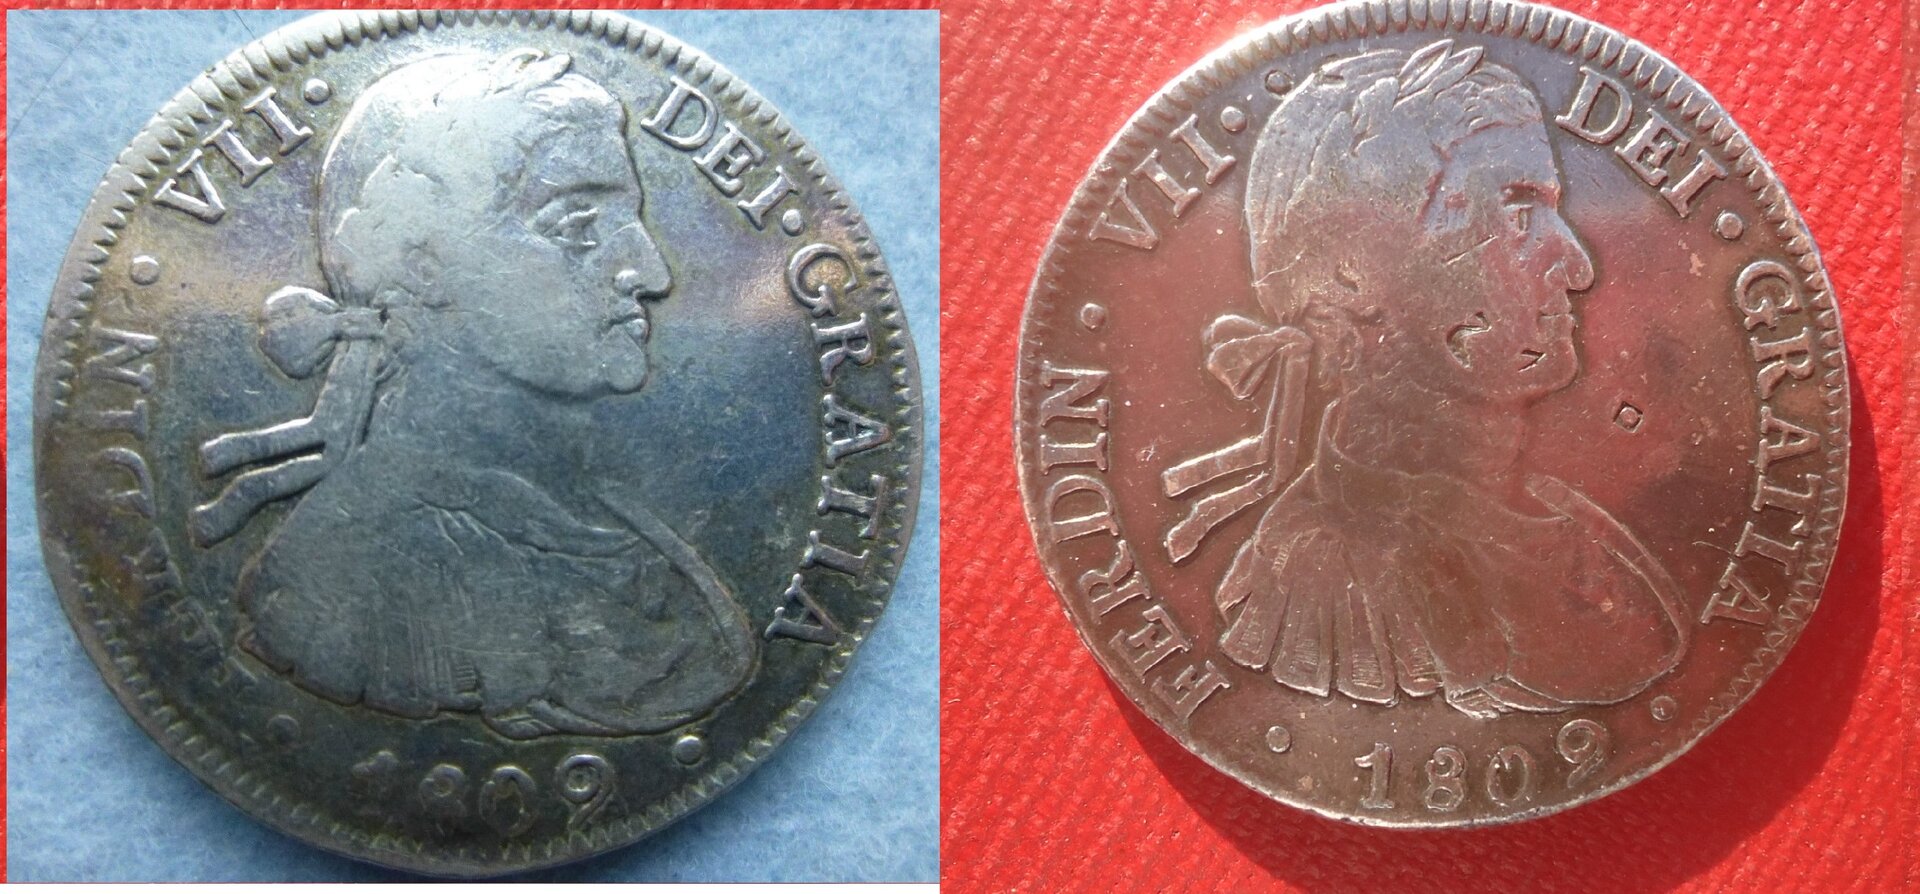 Mexico - 1809 8 reales portrait types2.jpg